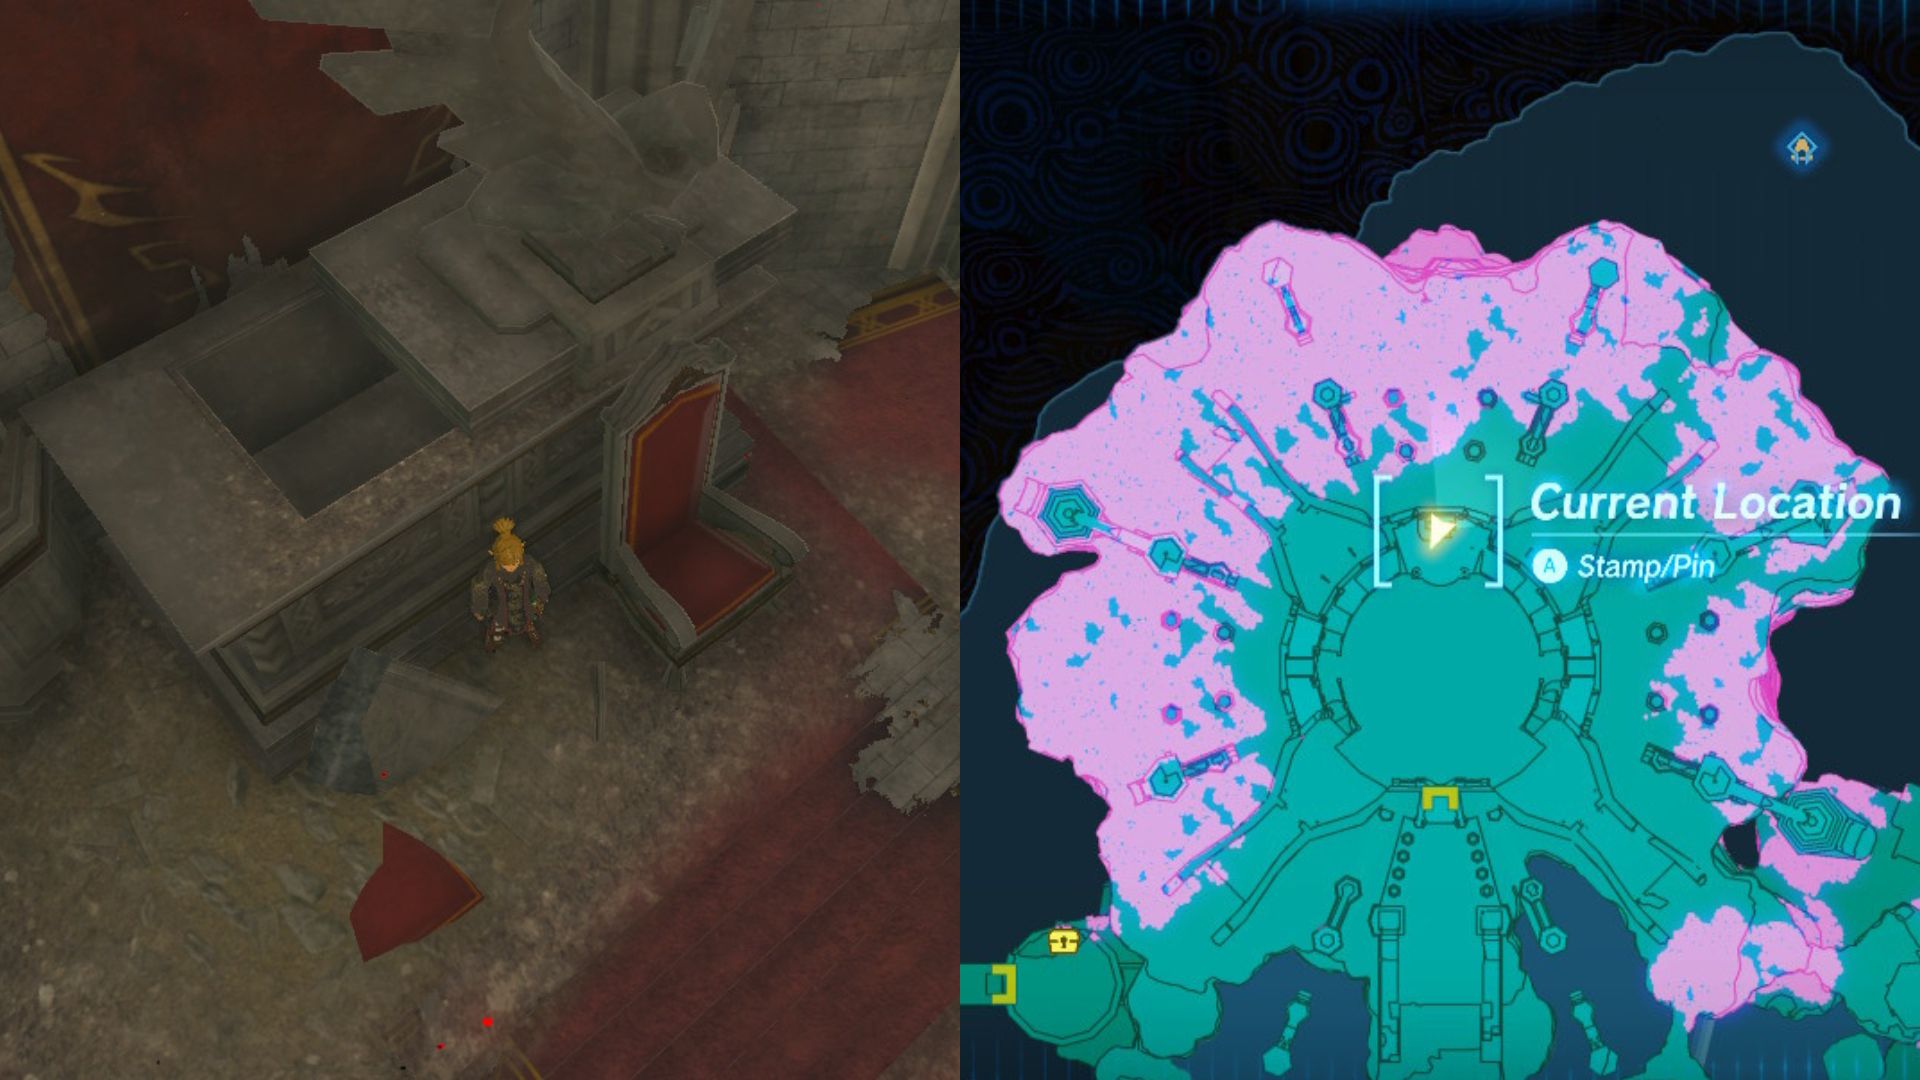 Mystic Armor location in Zelda: Tears of the Kingdom - Polygon